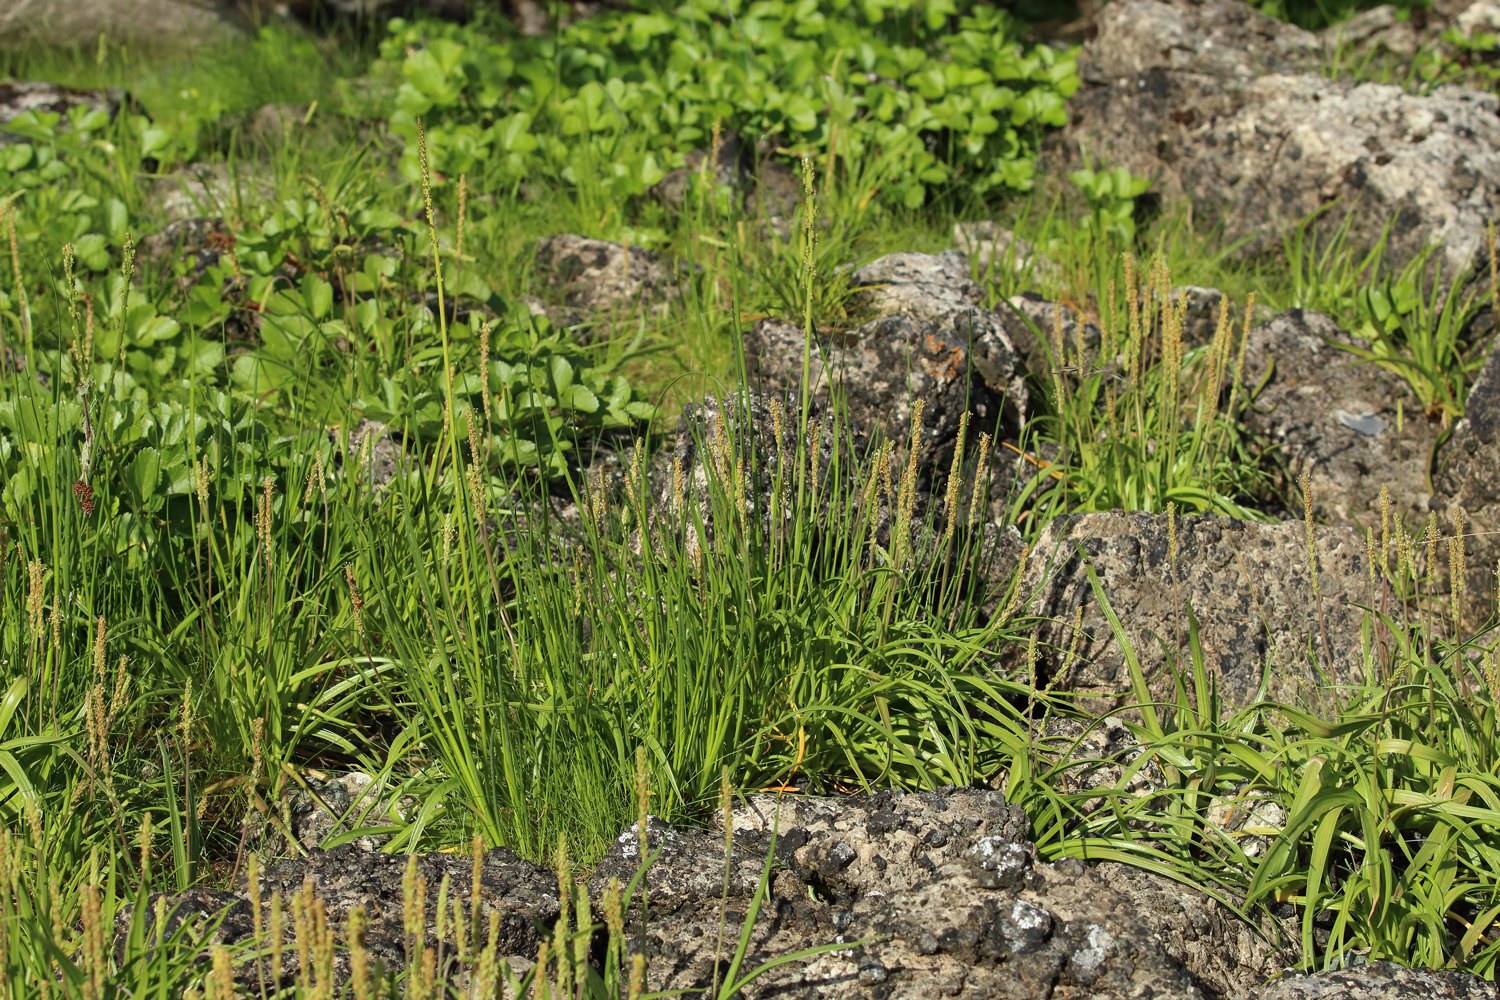 Goosetongue and arrowgrass growing together